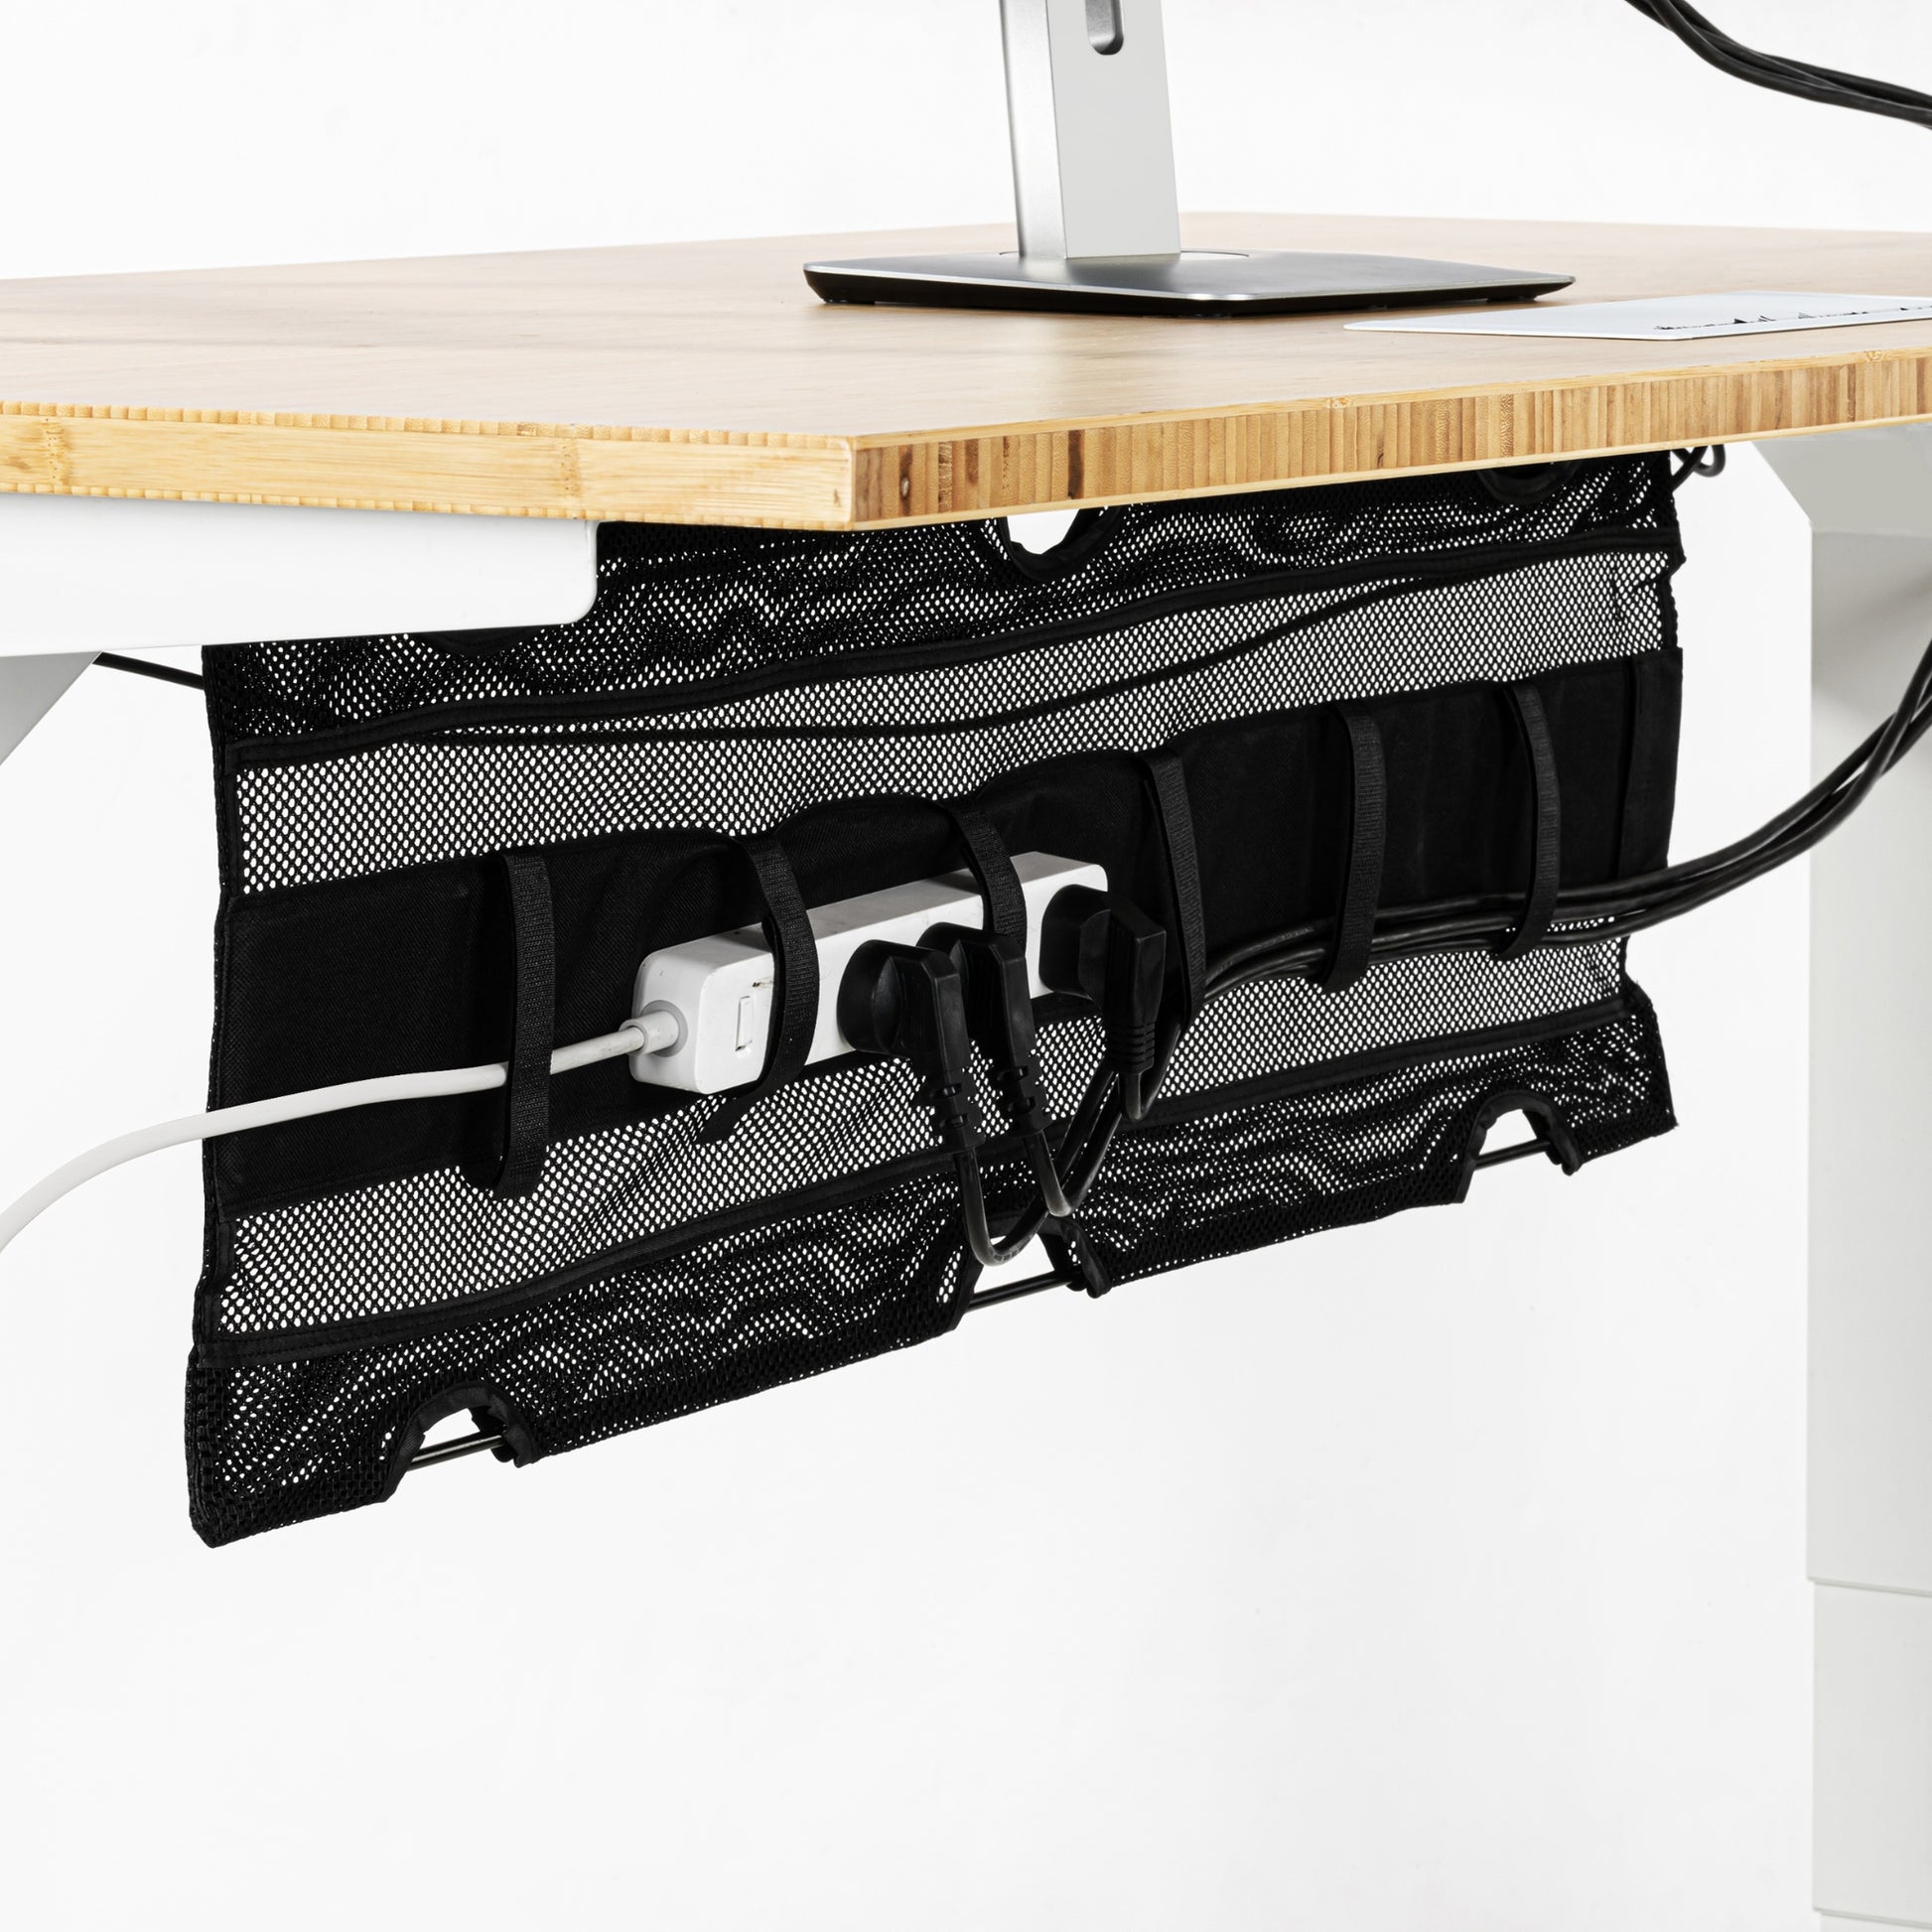 Under-Desk Mesh Cable Management System